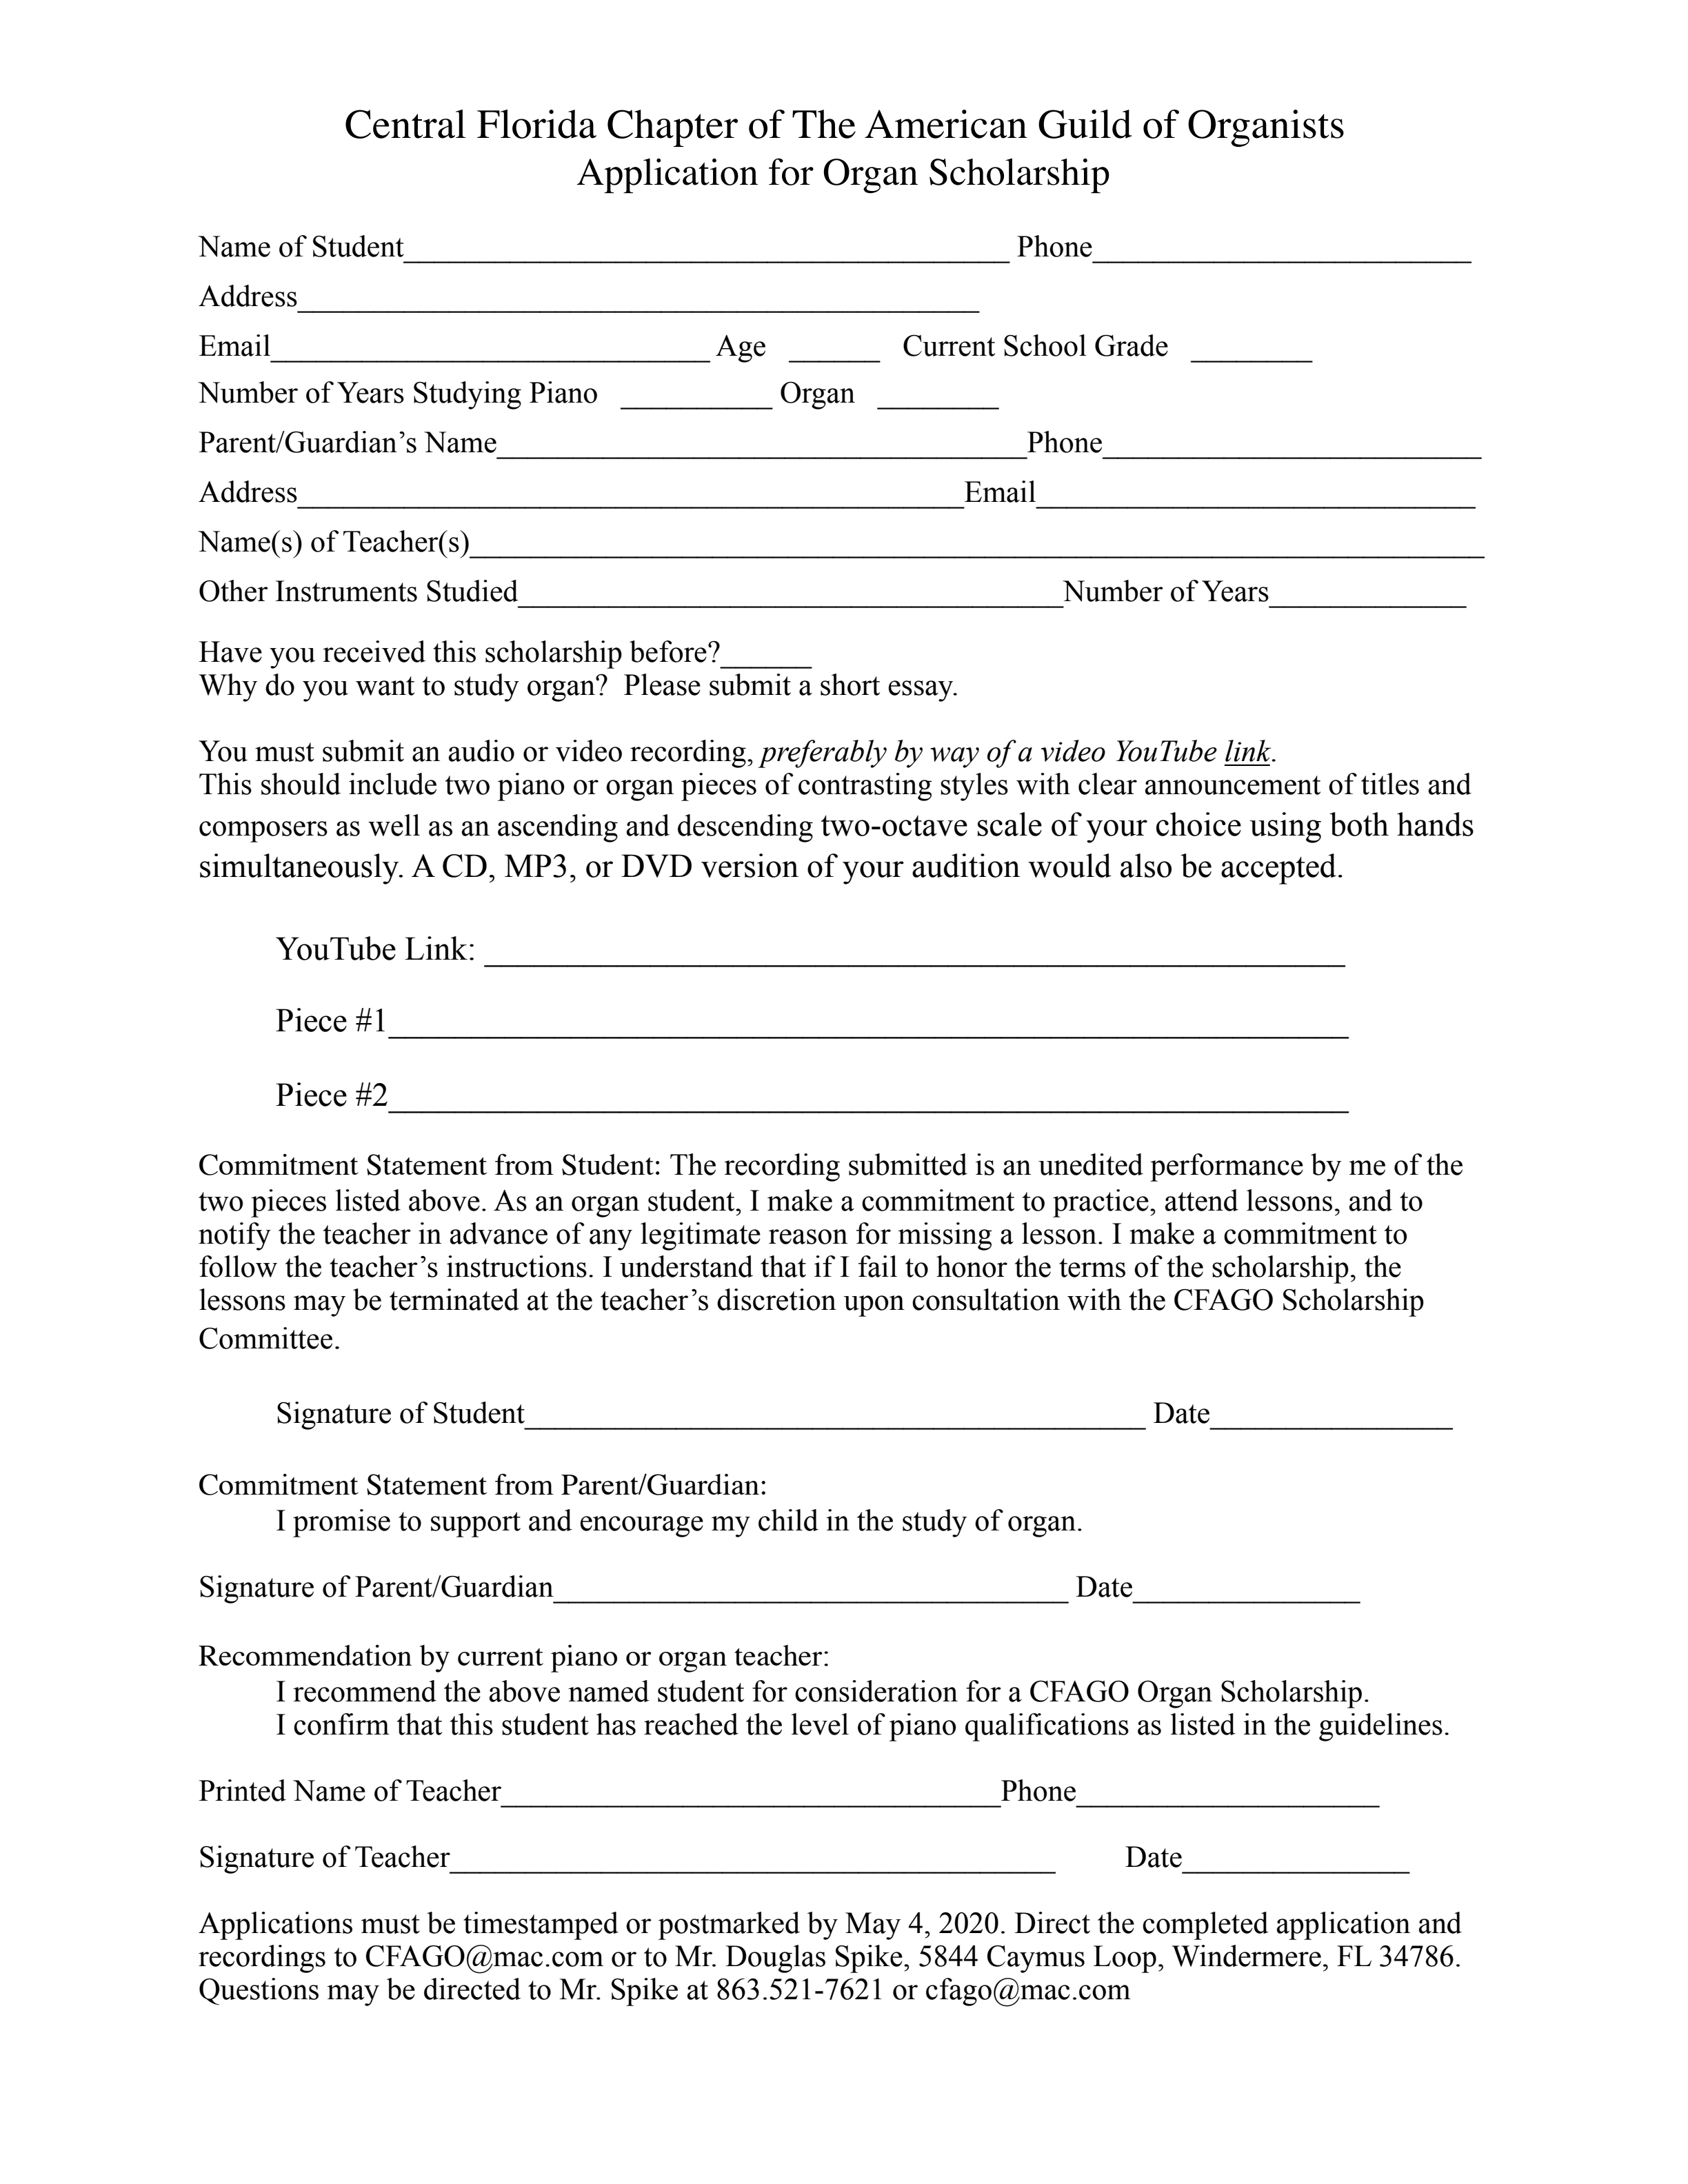 Scholarship Application